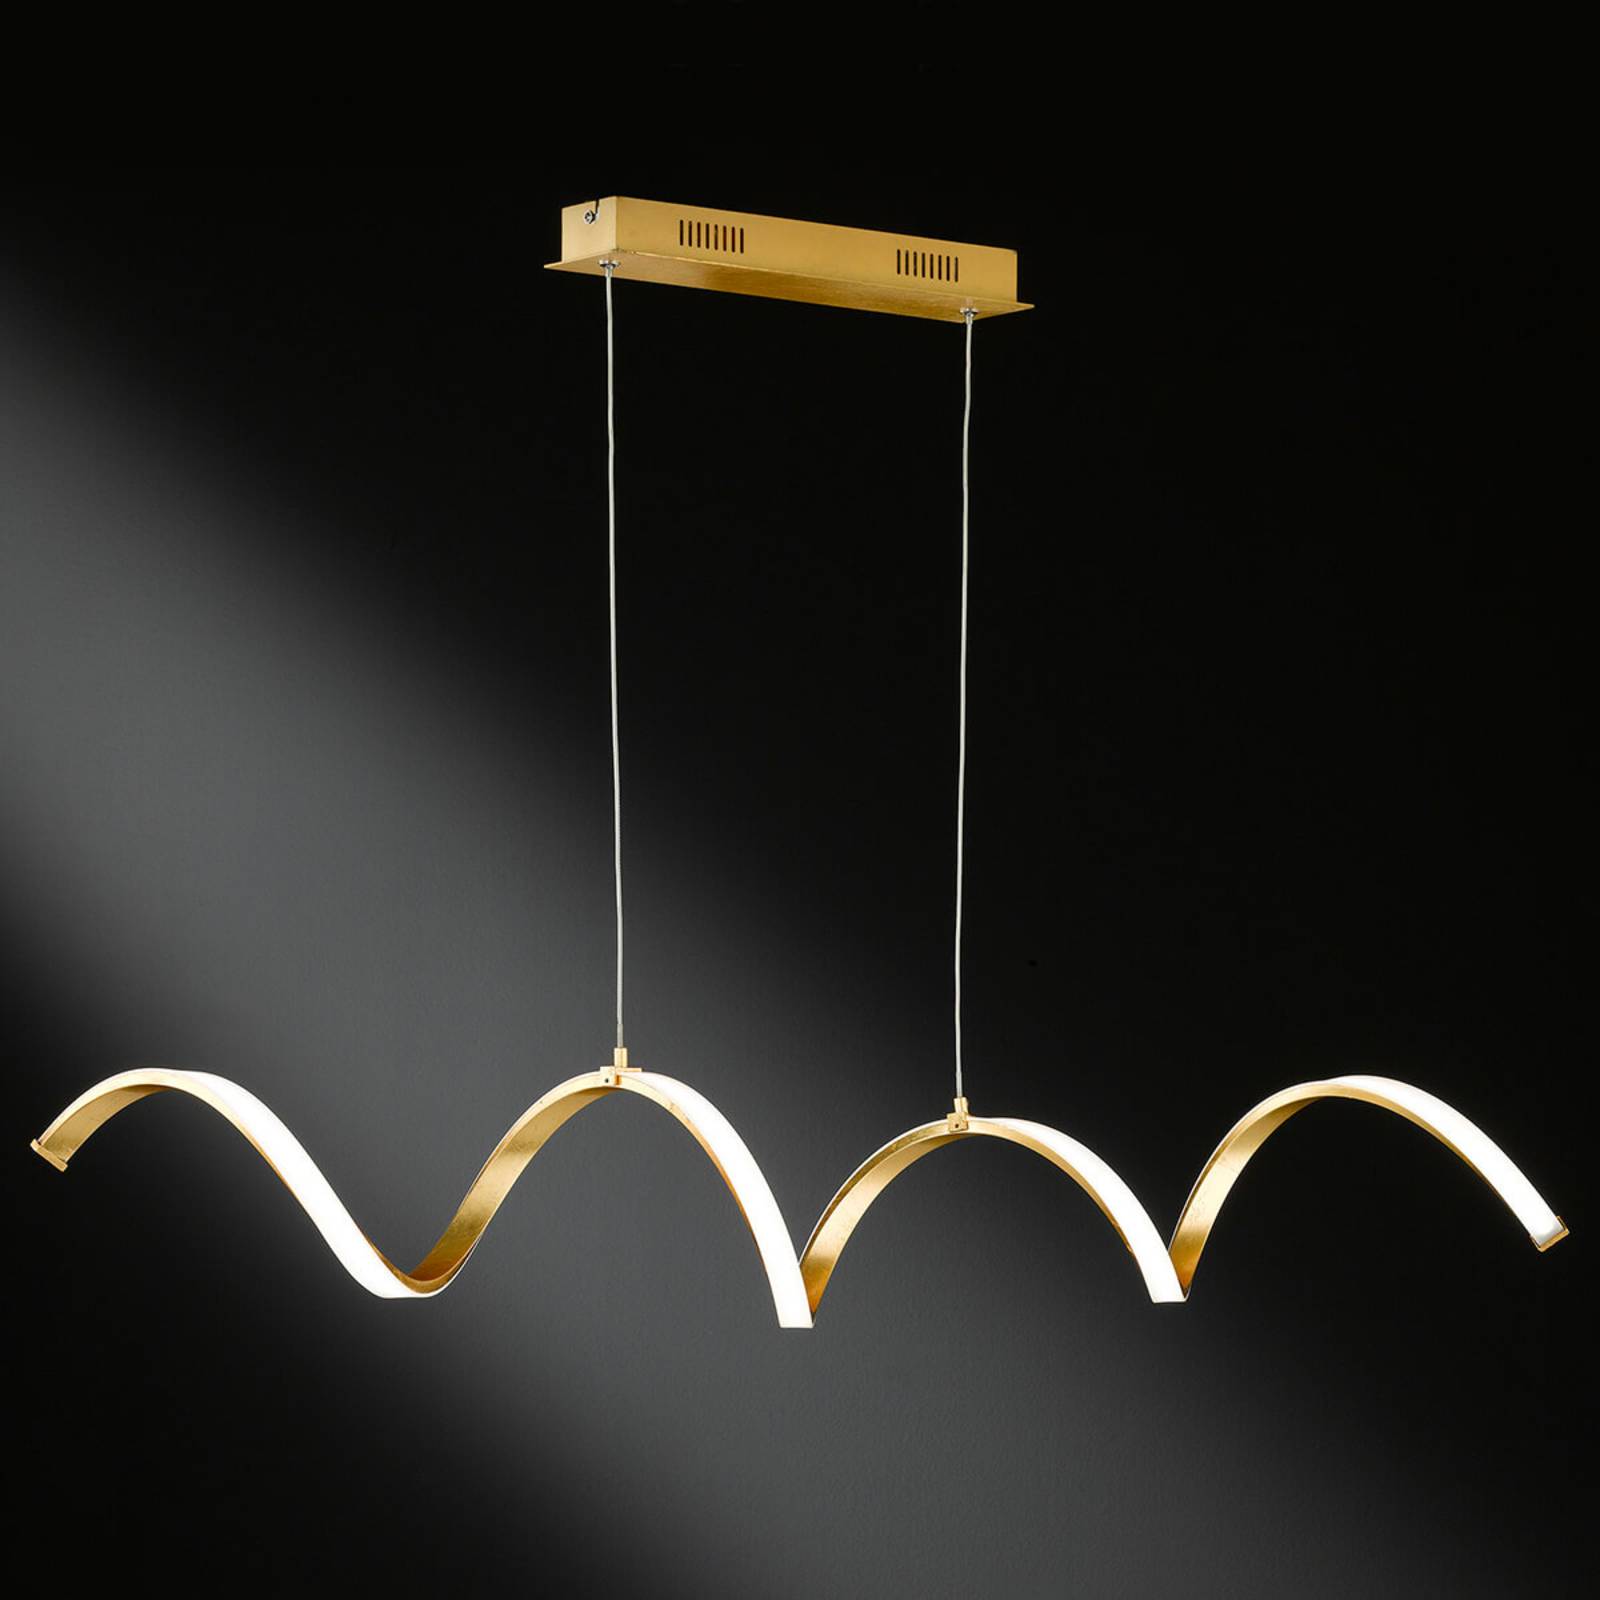 Russell - ekstrawagancka lampa wisząca LED, złota